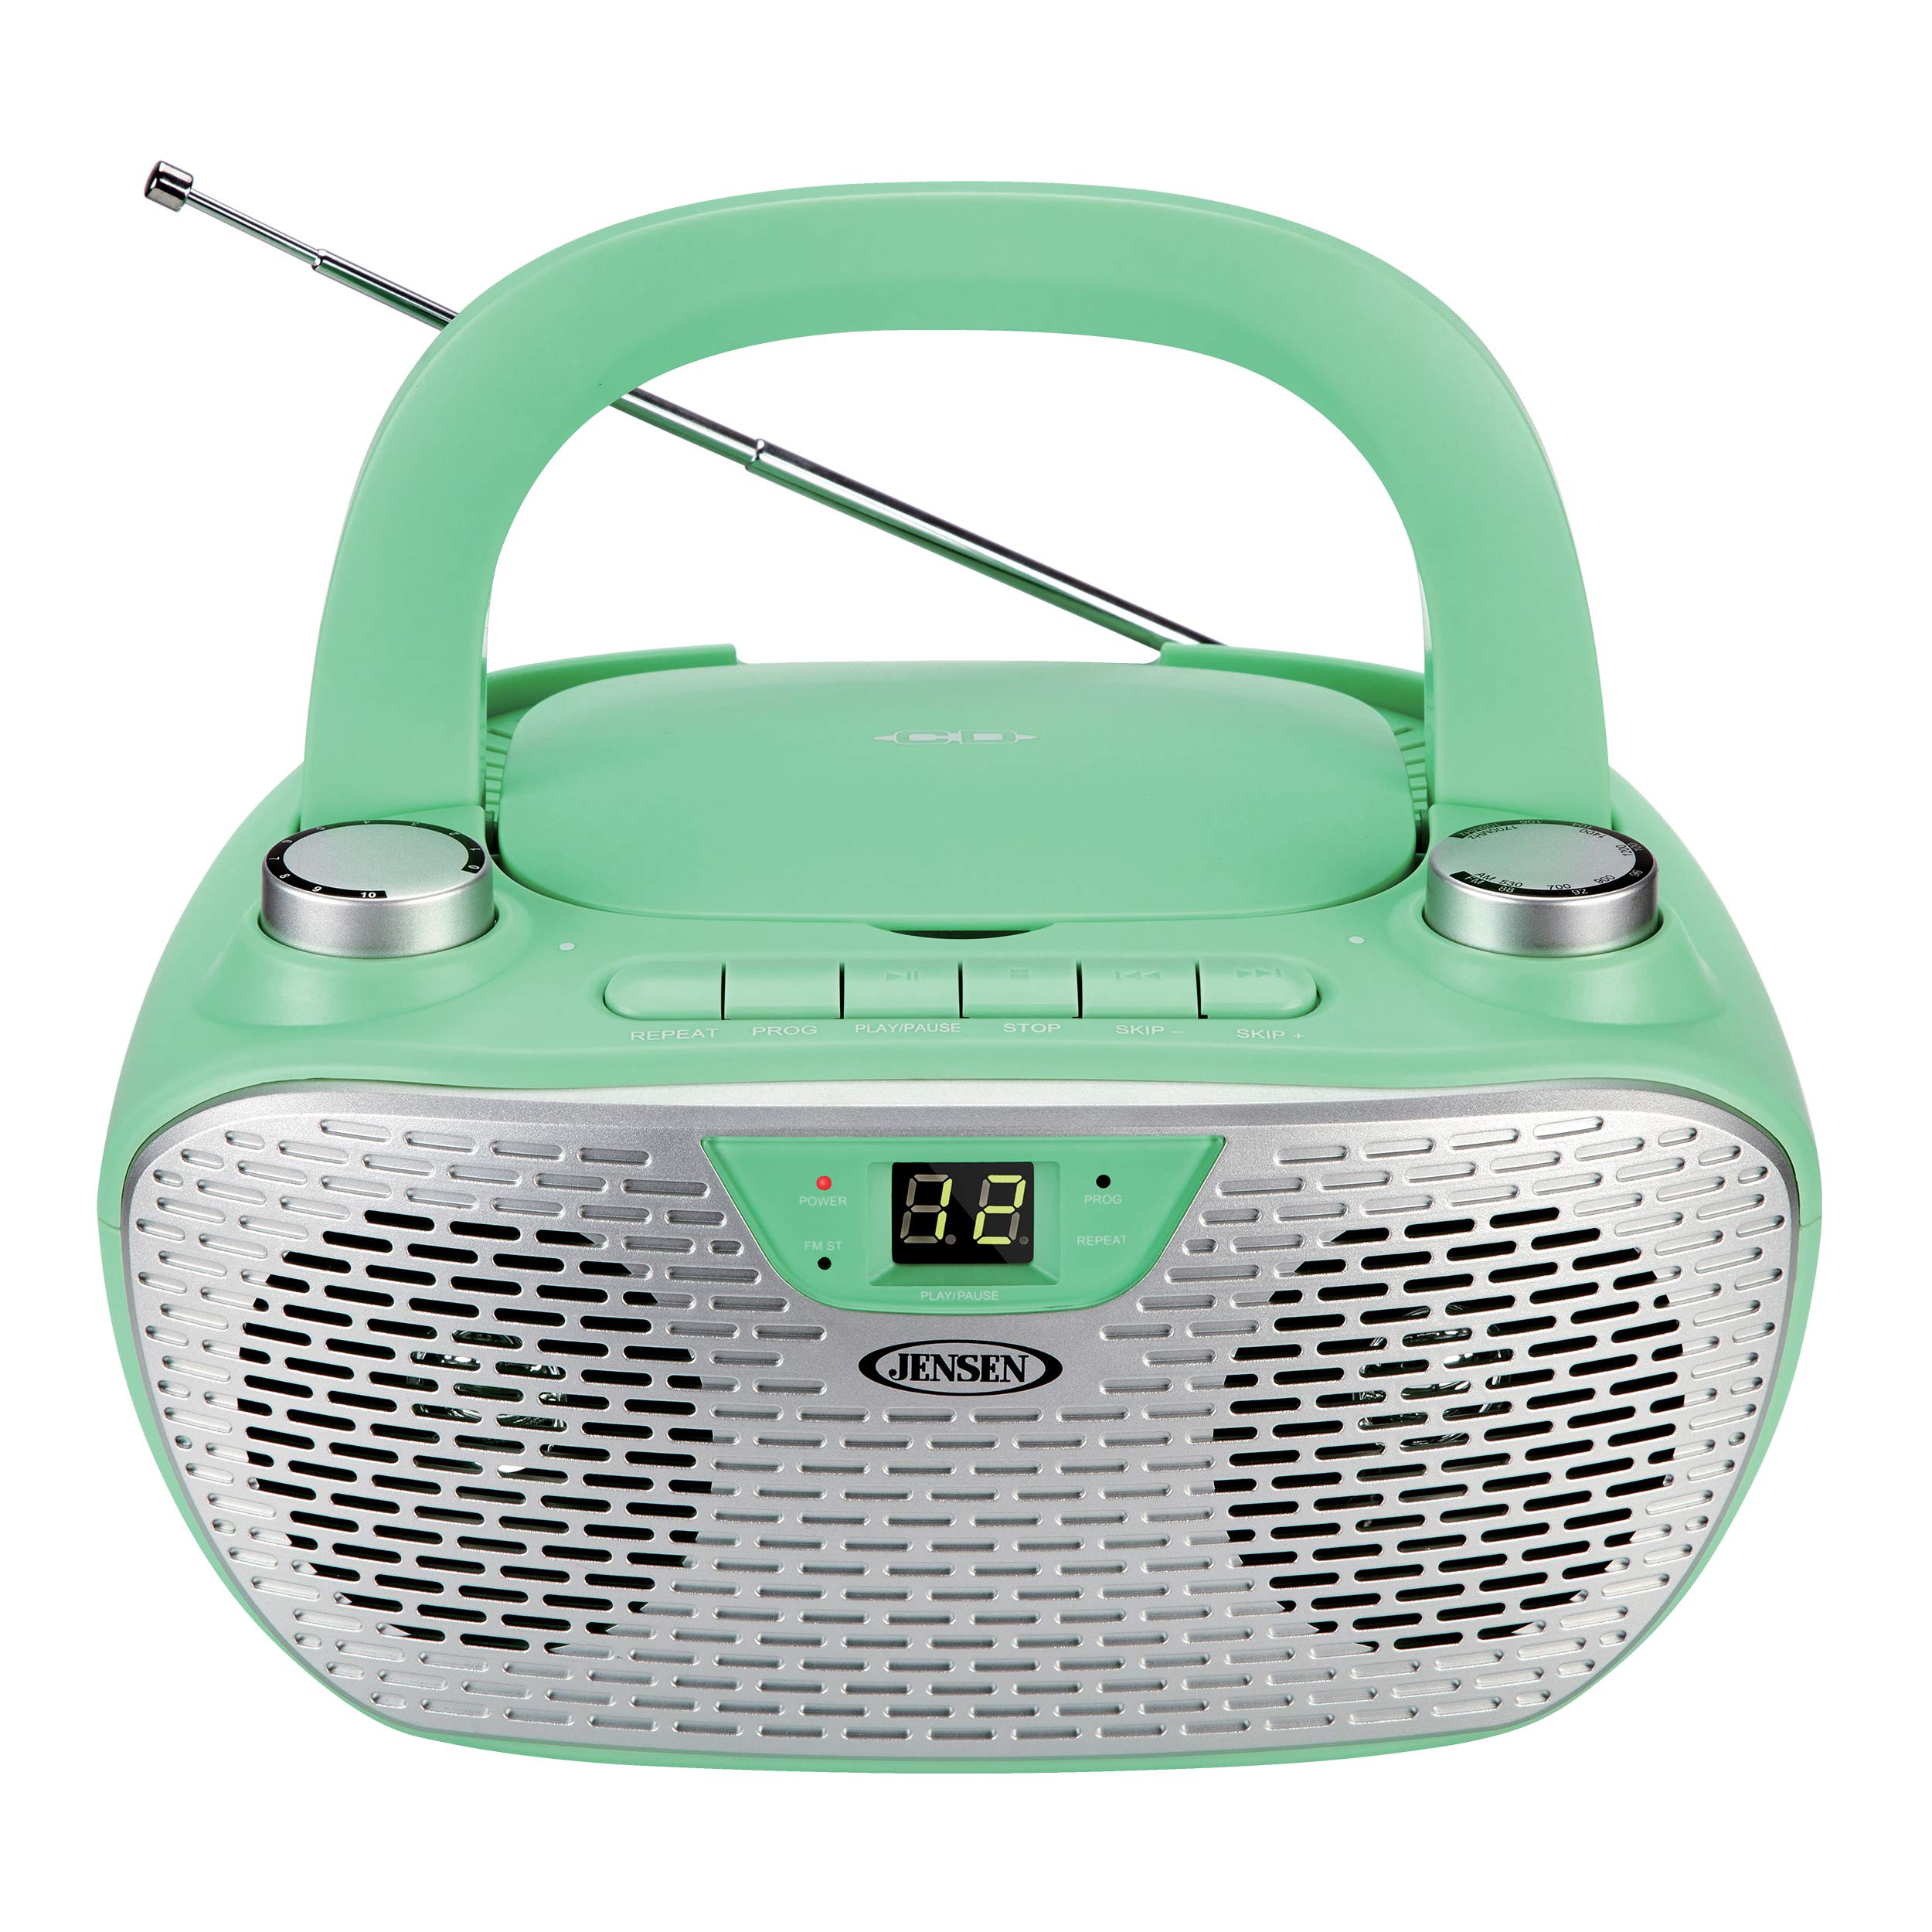 JENSEN CD-485-GR CD-485 1-Watt Portable Stereo CD Player with AM/FM Radio (Green)